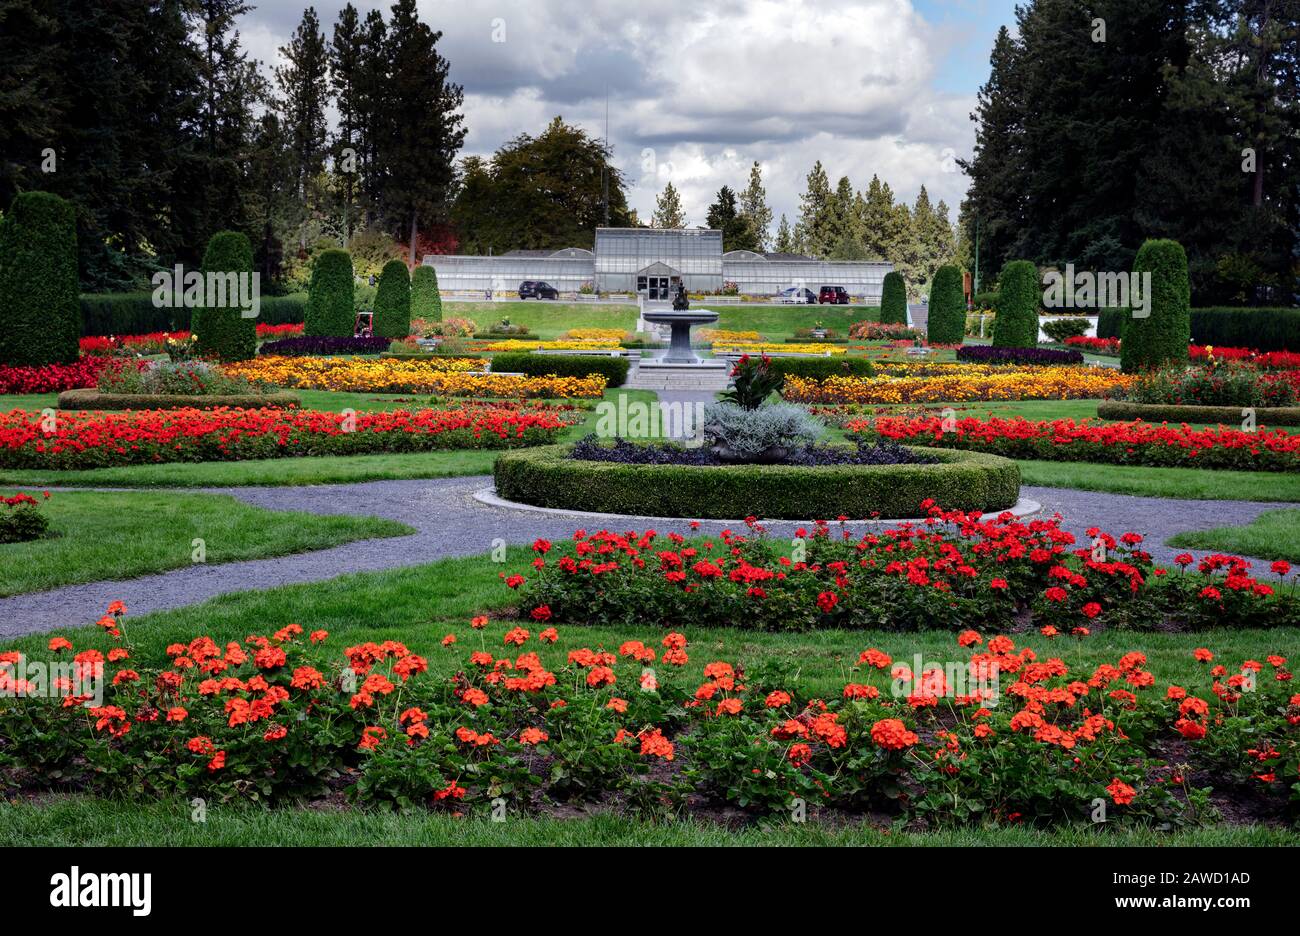 WA17386-00...WASHINGTON - Duncan Garden Area Manito Park in Spokane. Stockfoto